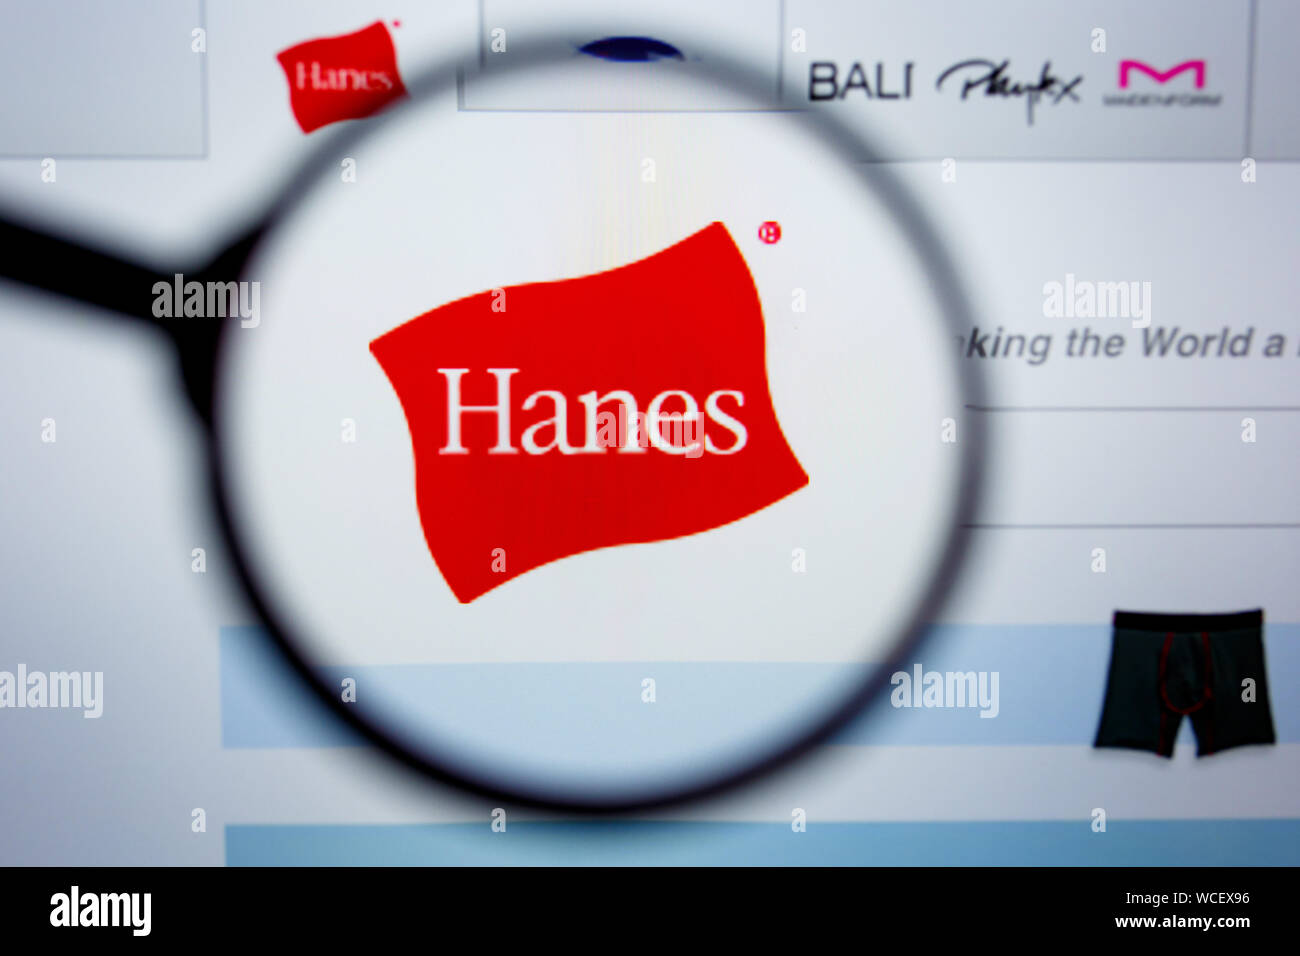 Los Angeles, California, USA - 29 Jule 2019: Illustrative Editorial of HANES.COM website homepage. HANES. logo visible on display screen. Stock Photo